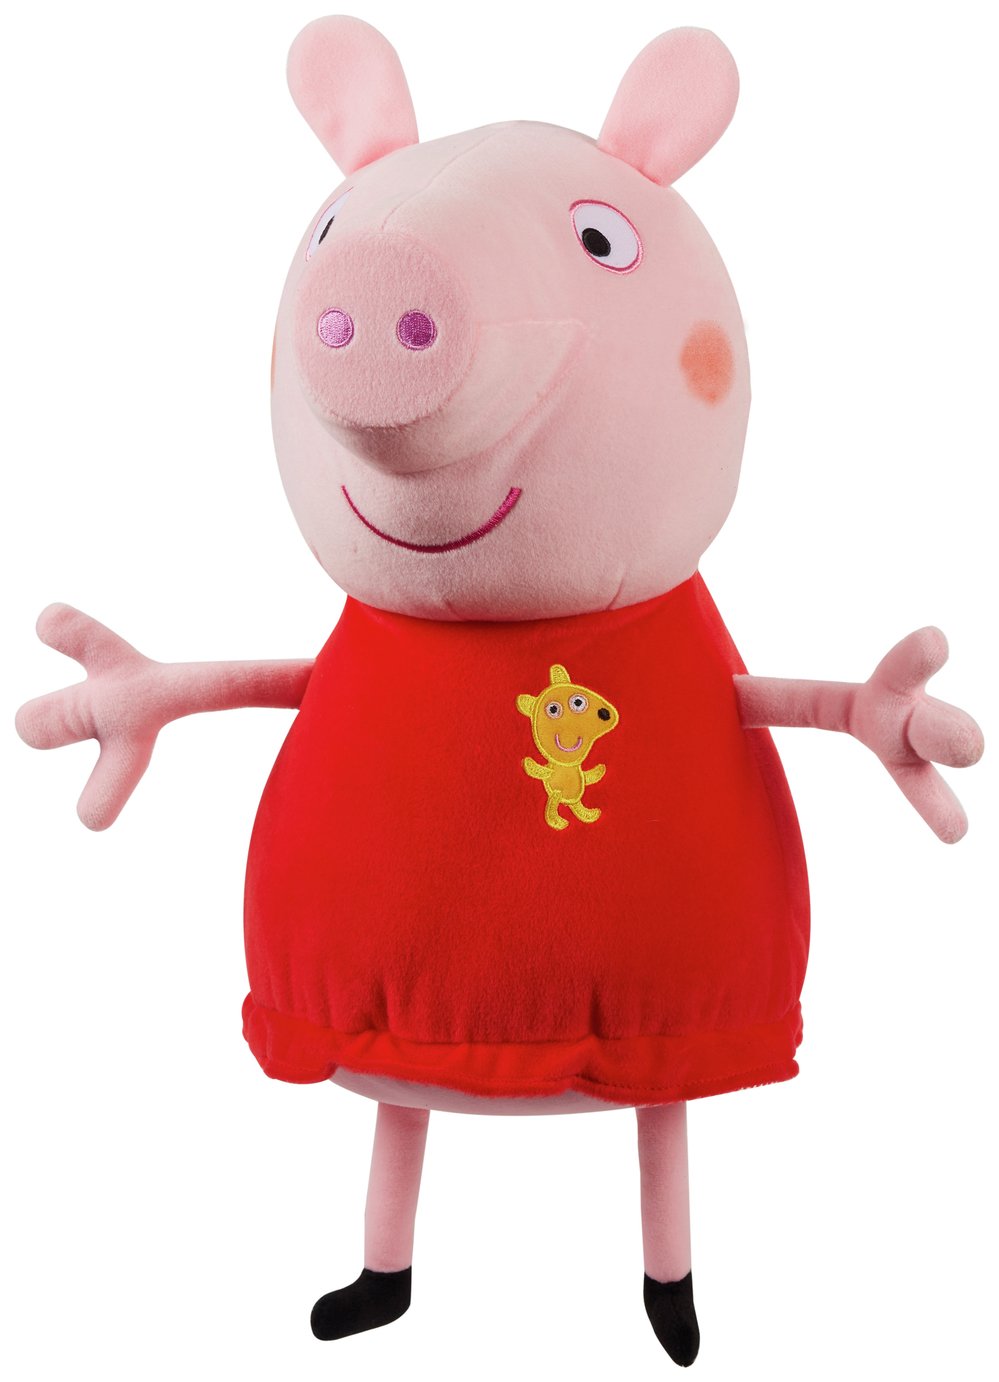 Peppa Pig Talking Plush Red Dress review